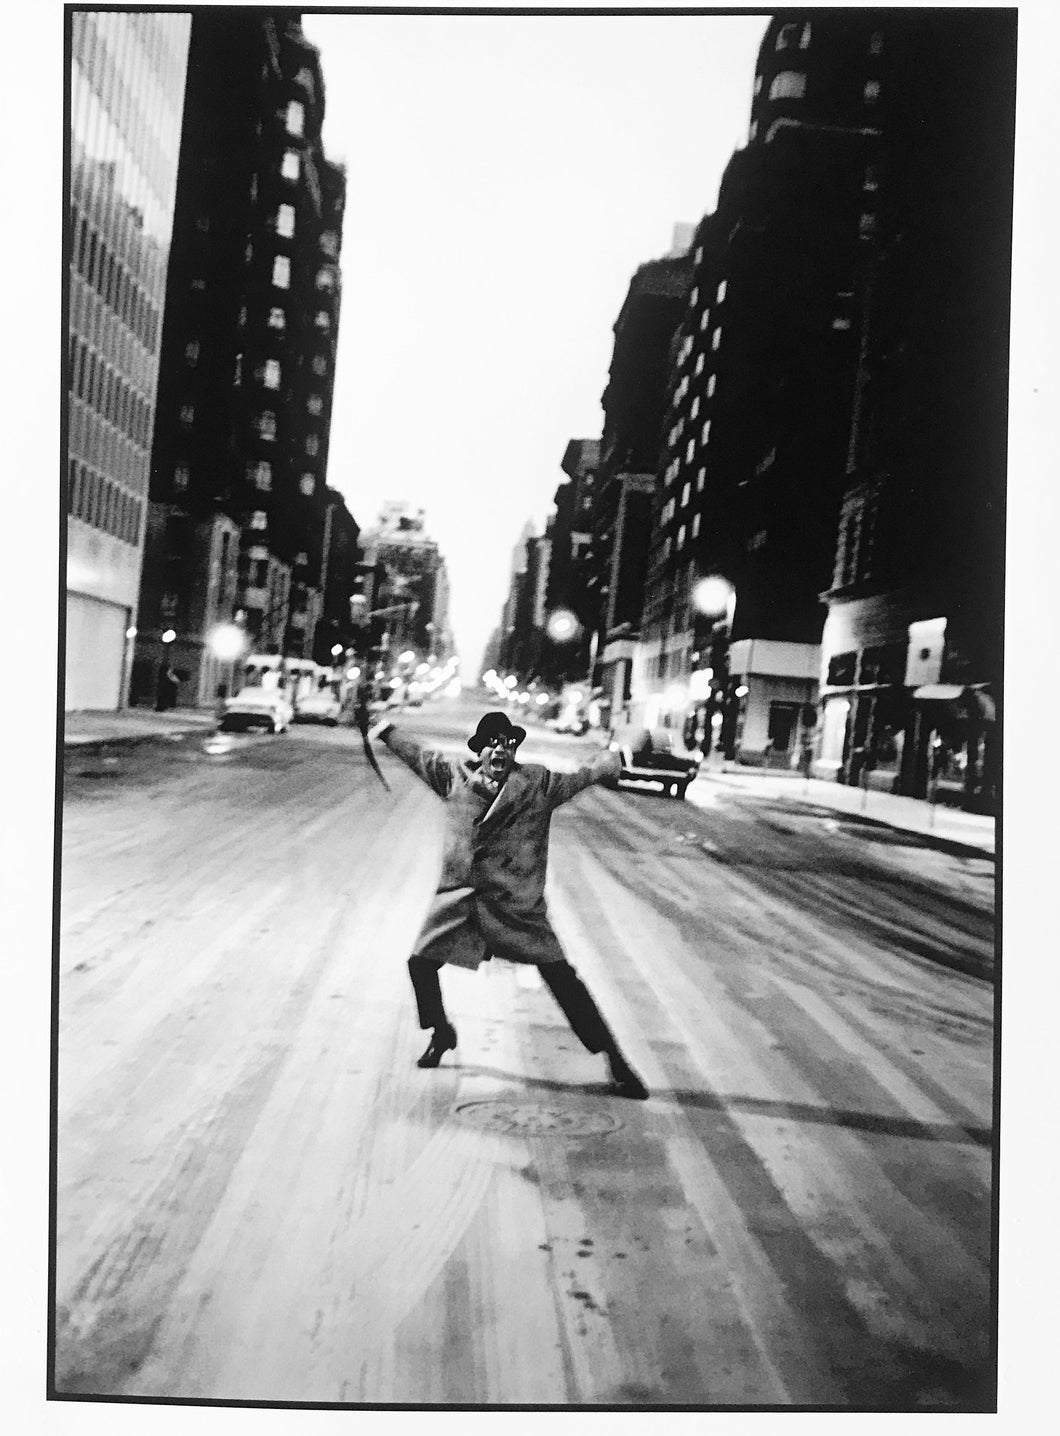 Sammy Davis Junior by Burt Glinn, New York City, Black-and-White Portrait Photography 1950s.